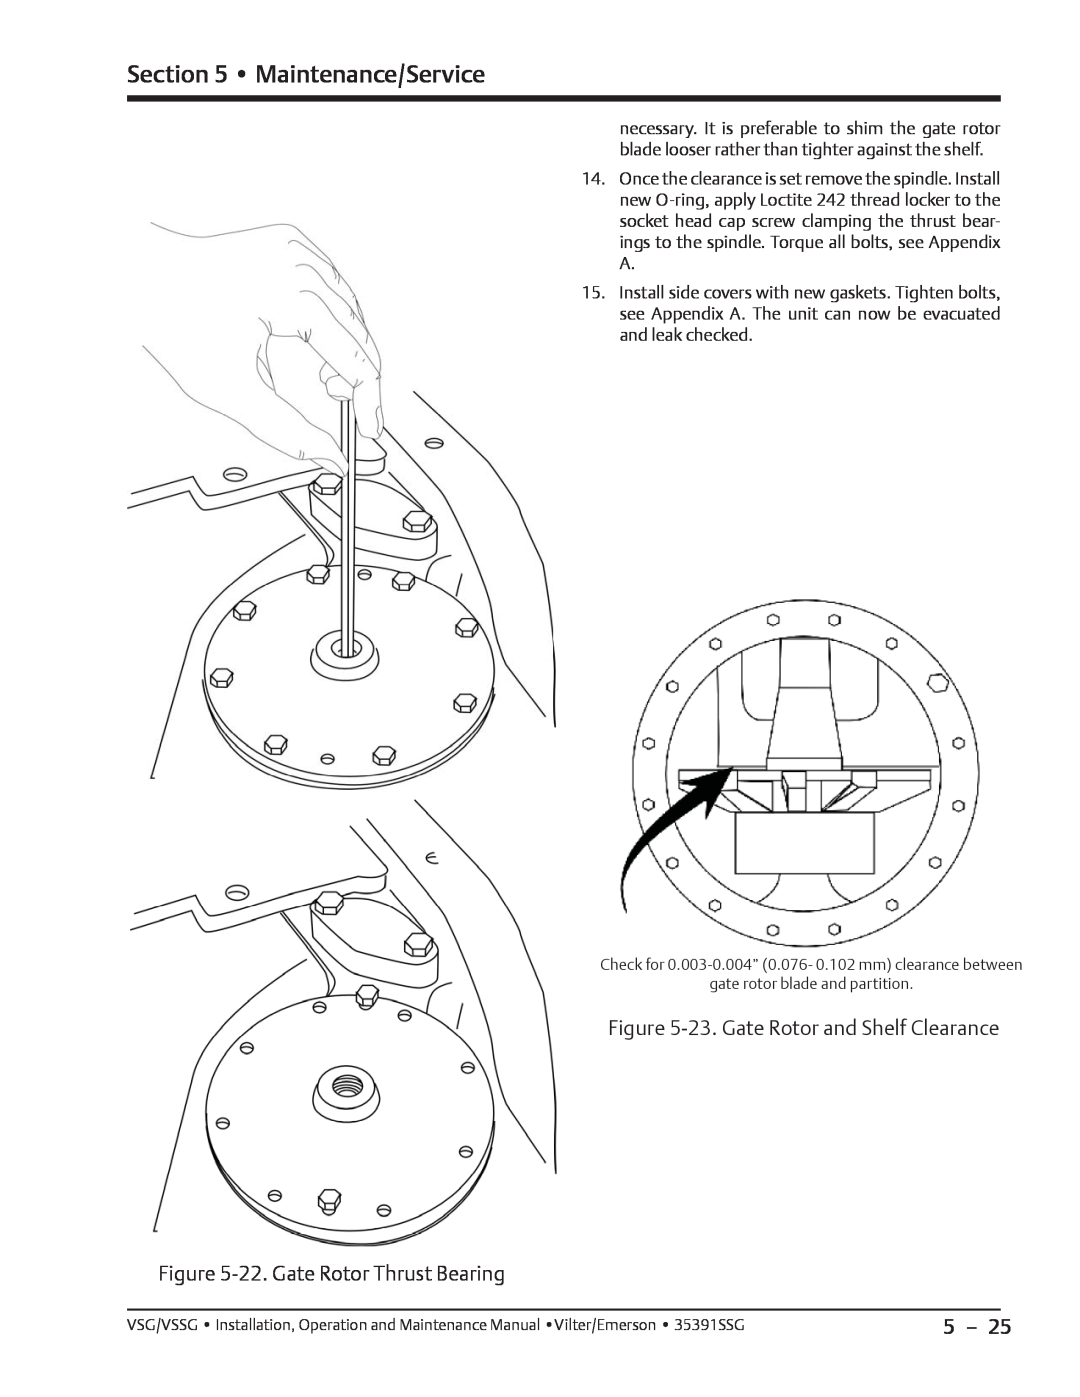 Emerson VSG, VSSG manual 23. Gate Rotor and Shelf Clearance, 22. Gate Rotor Thrust Bearing, Maintenance/Service 